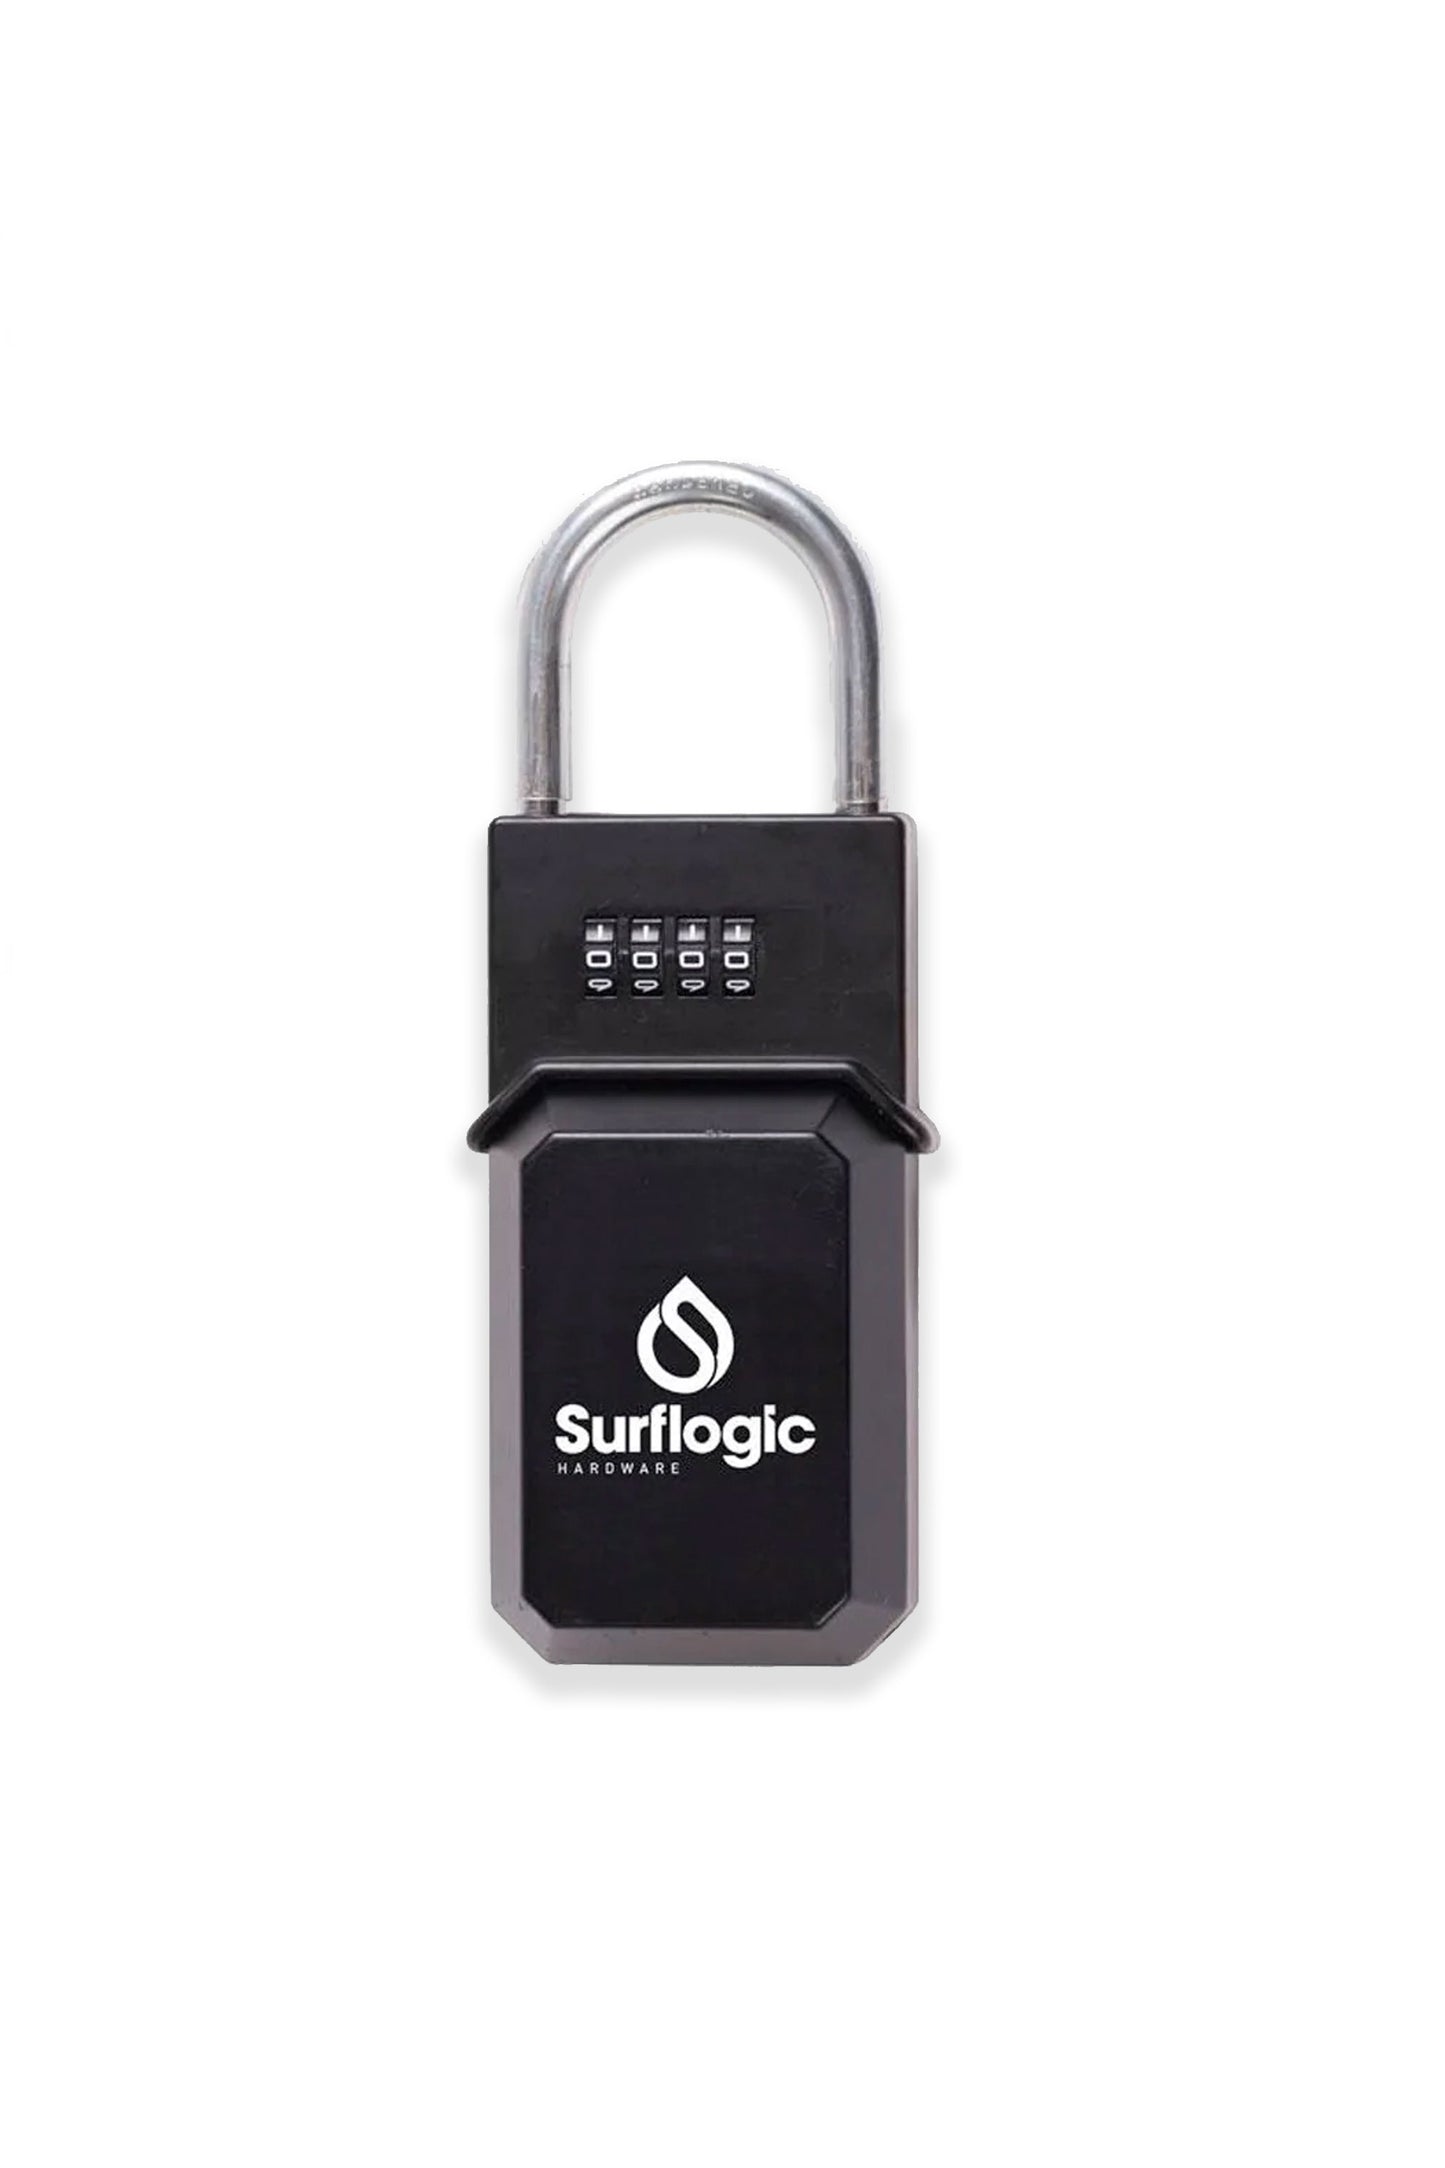 Pukas Surf Shop - Surflogic - Key Security lock